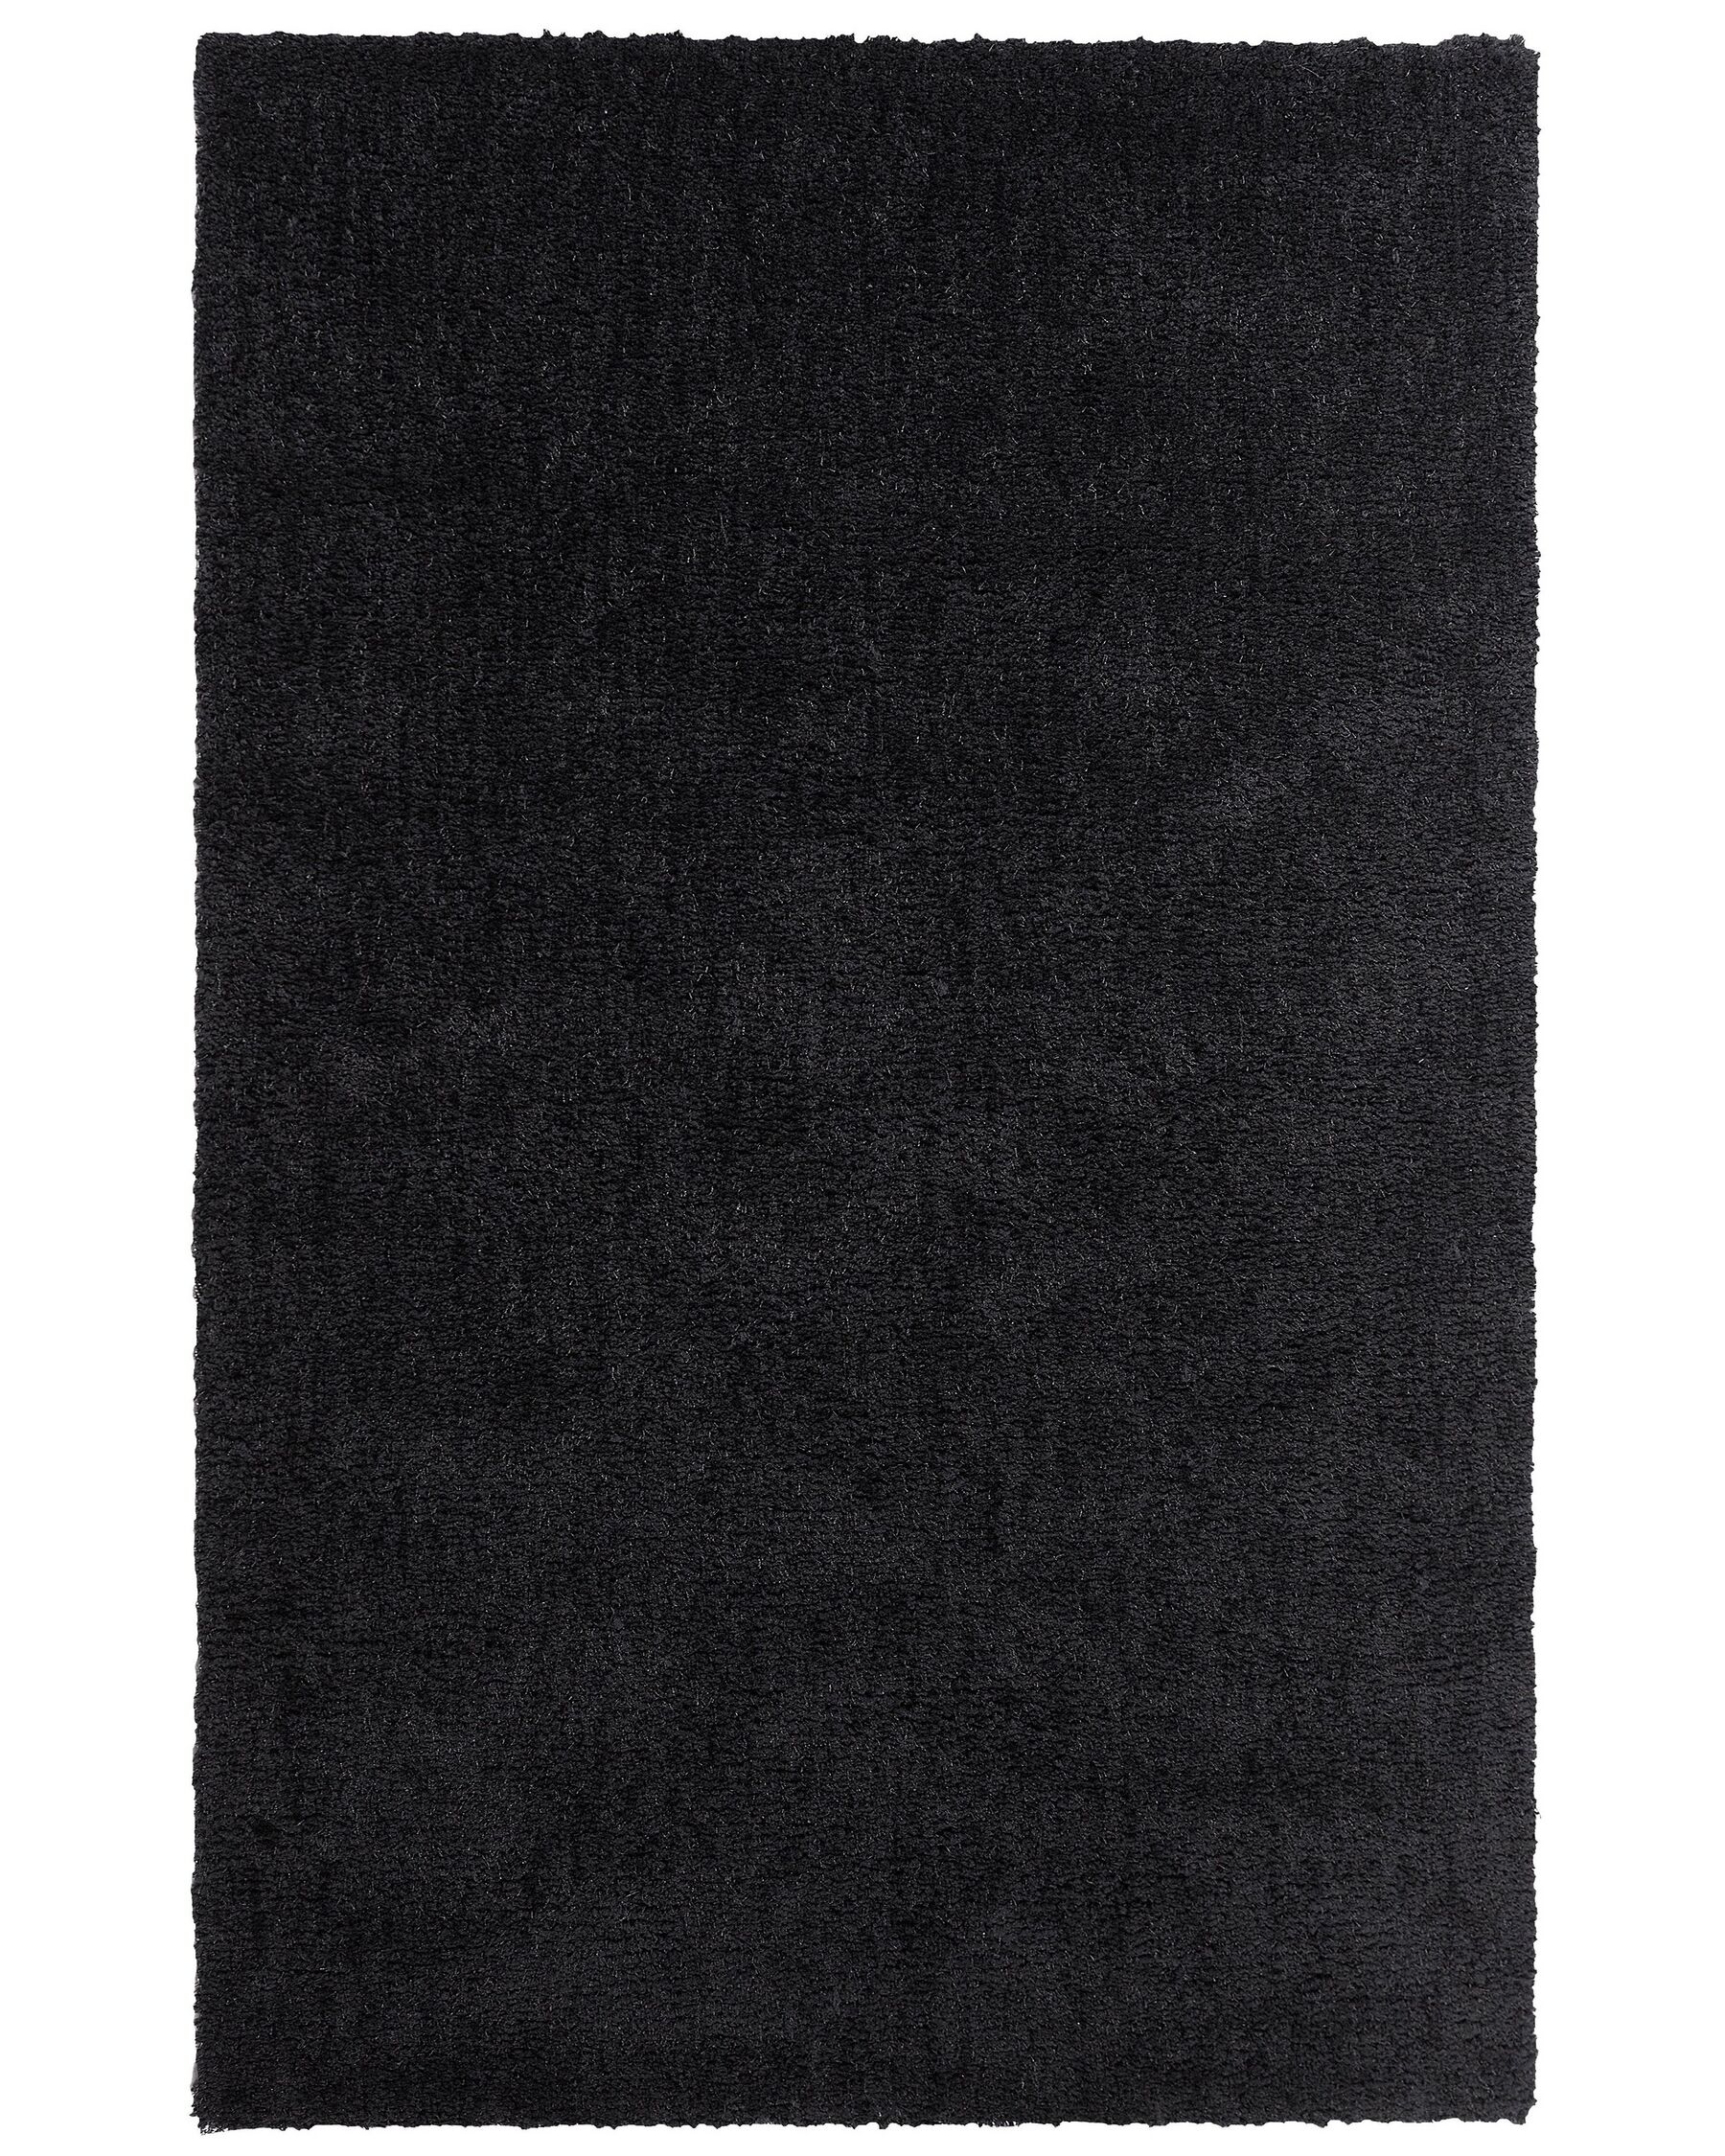 Černý koberec 200x300 cm DEMRE_683588